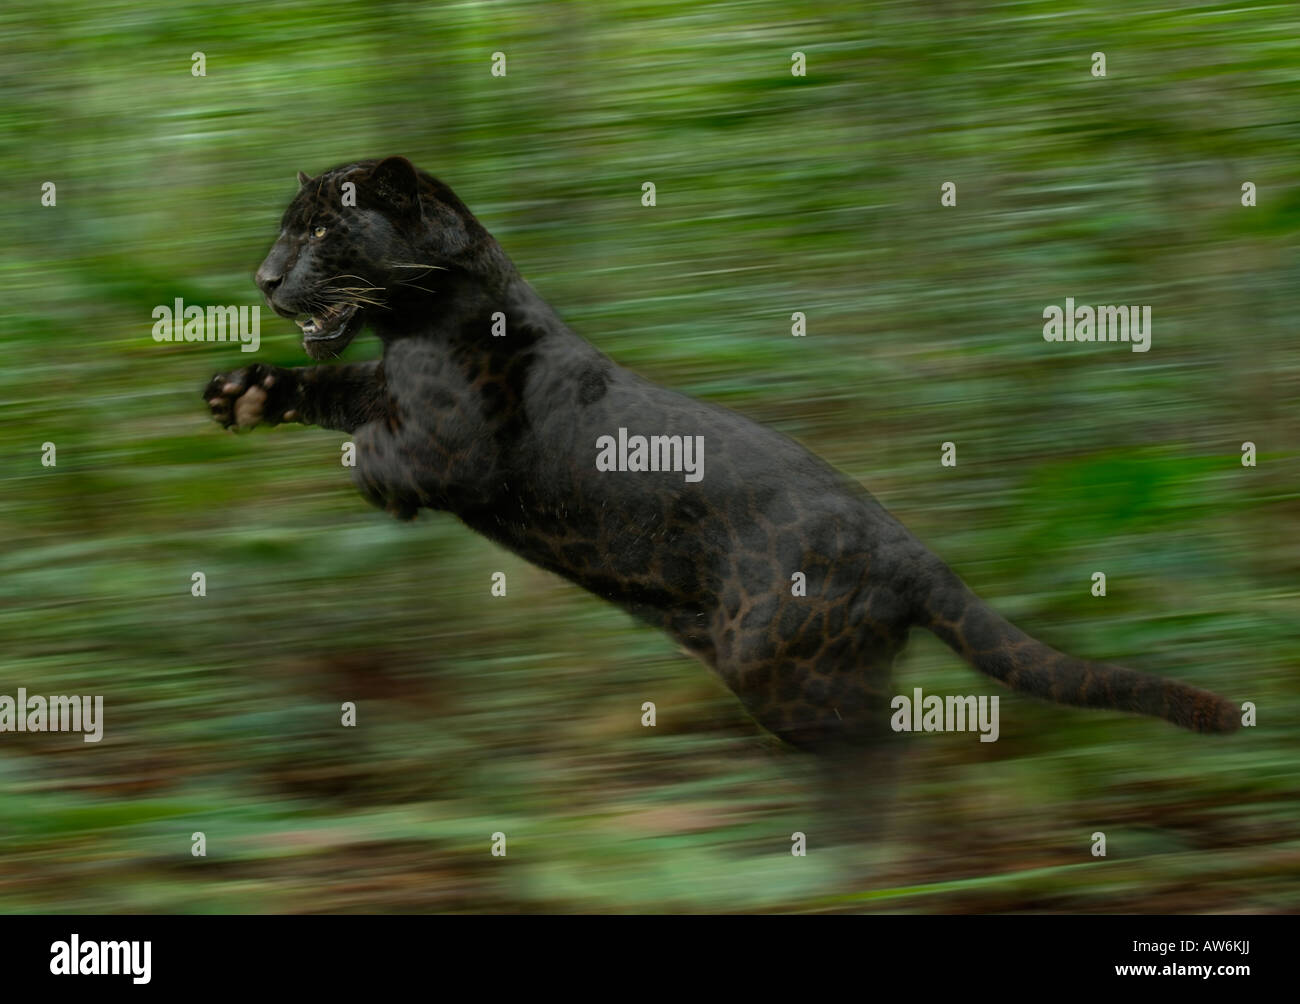 Black Panther or Black Jaguar Panthera onca running Stock Photo - Alamy